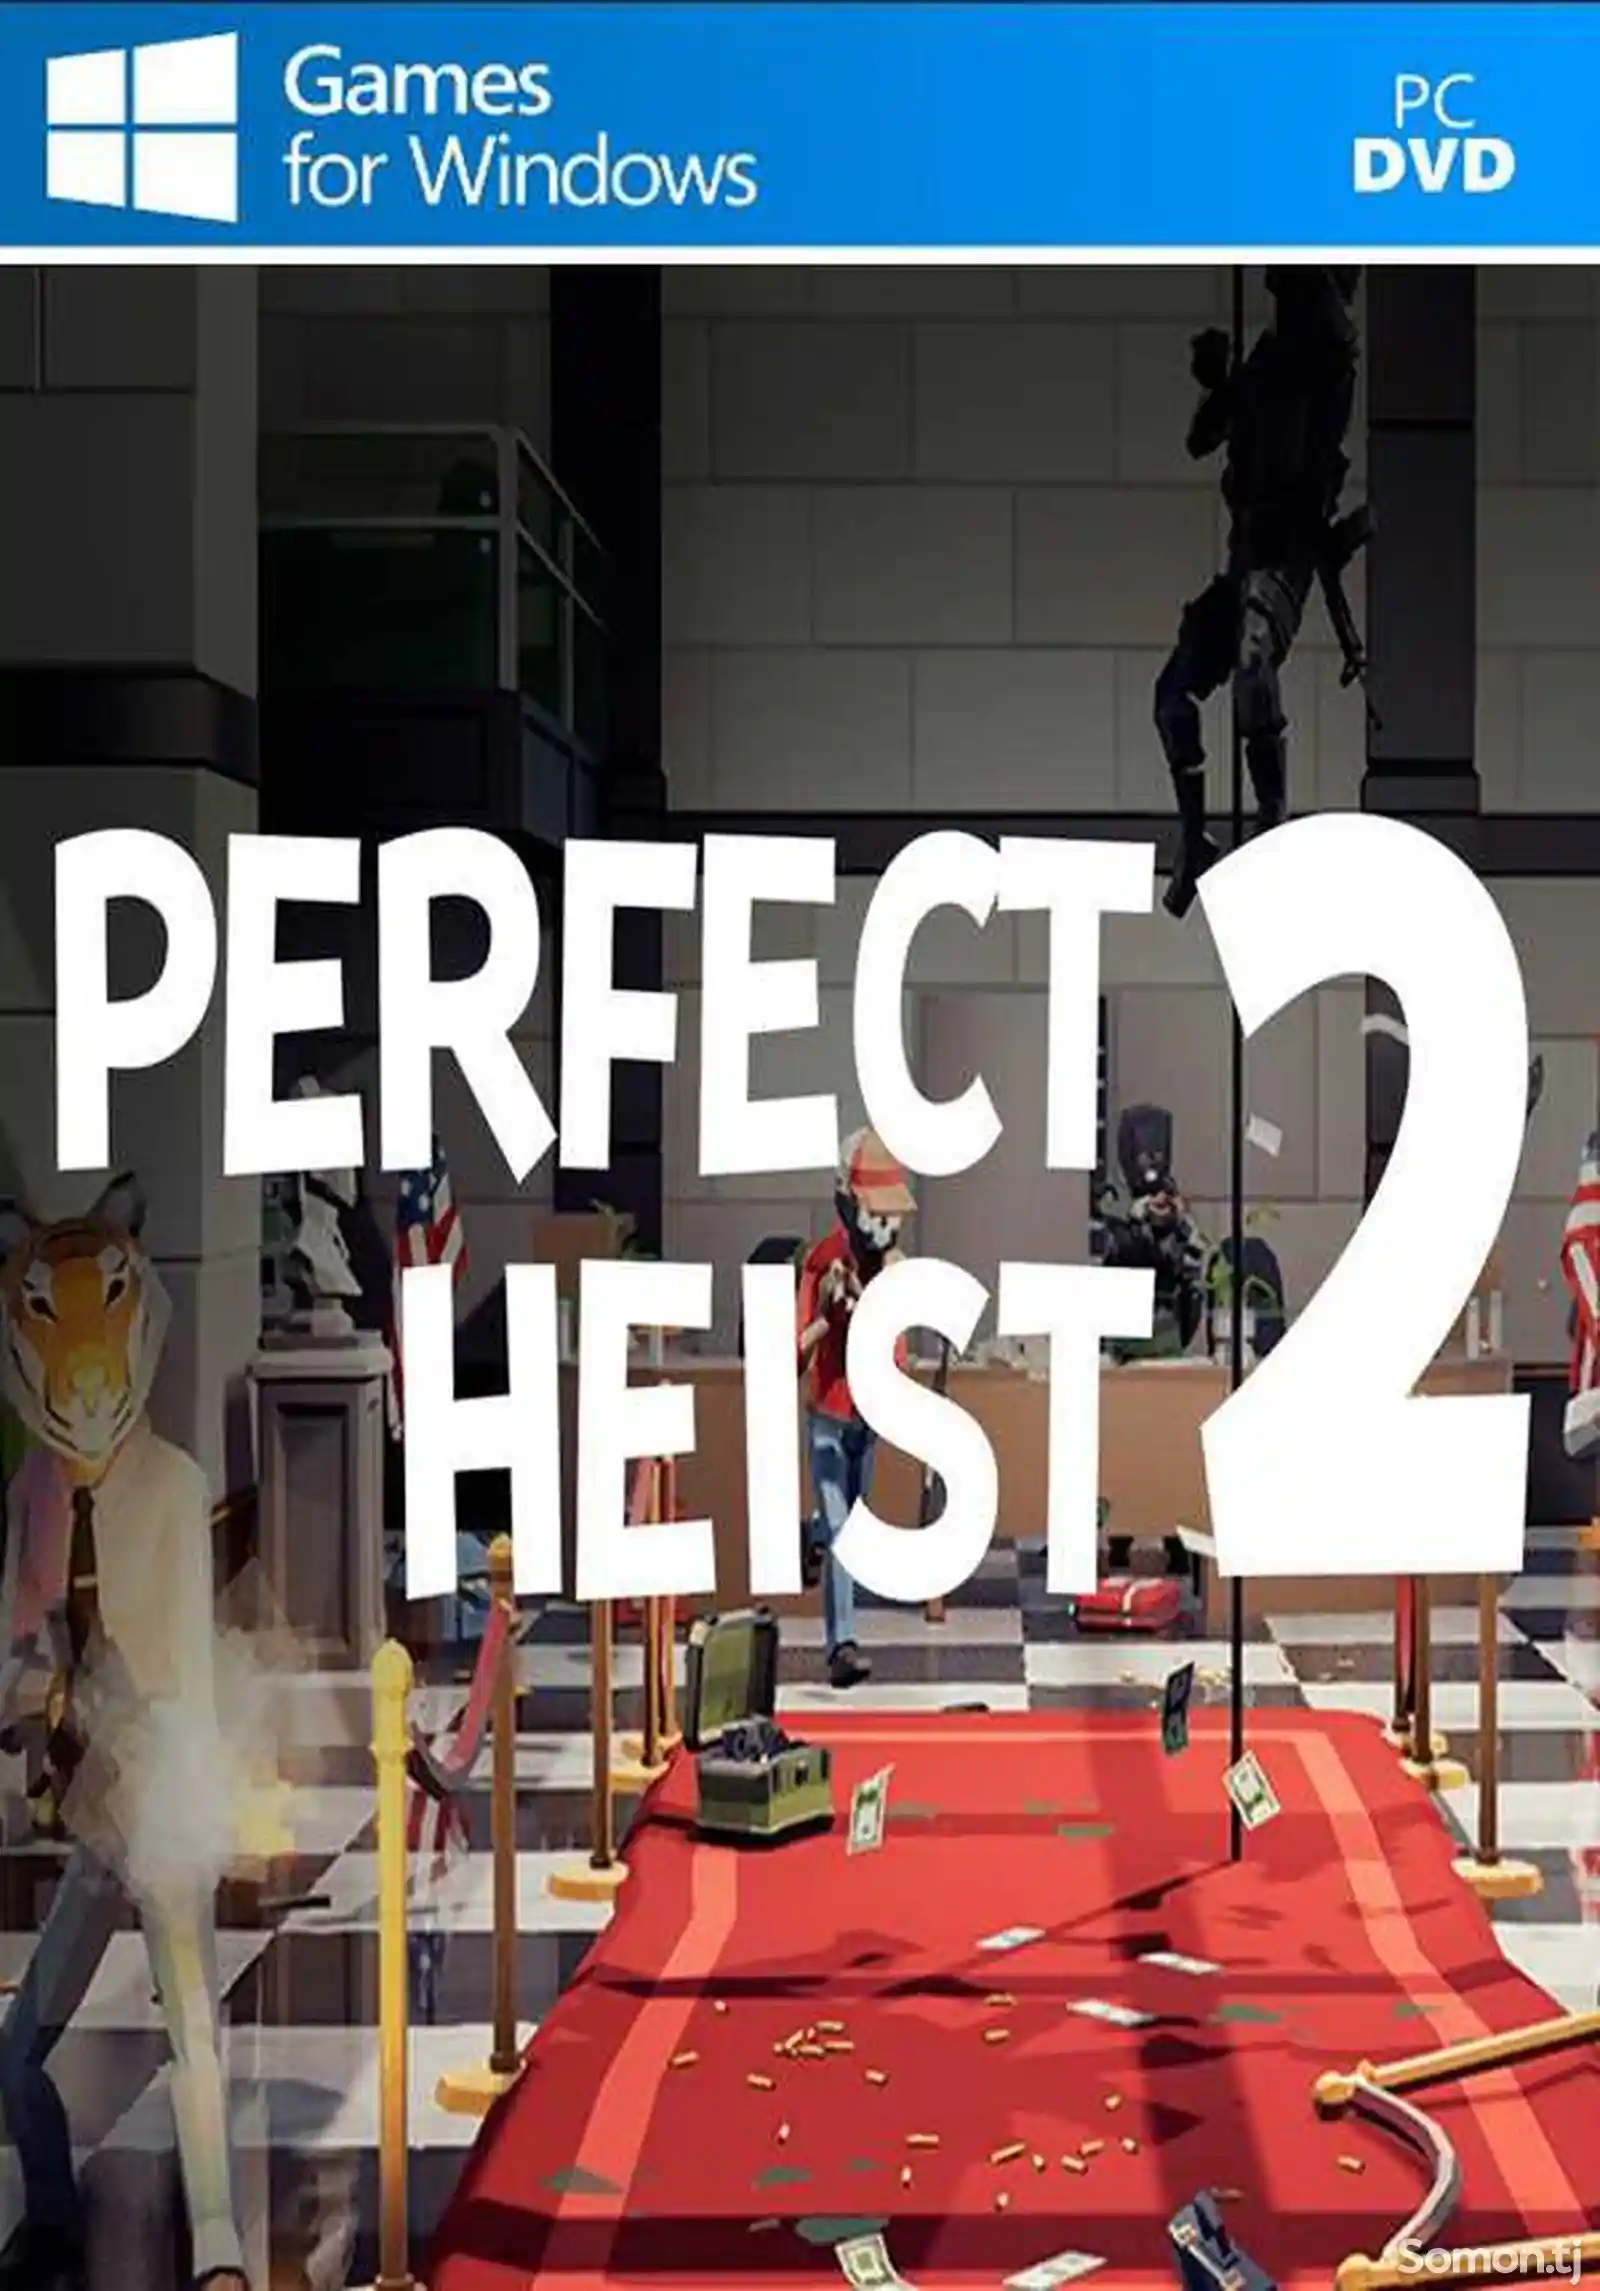 Игра Perfect heist 2 для компьютера-пк-pc-1